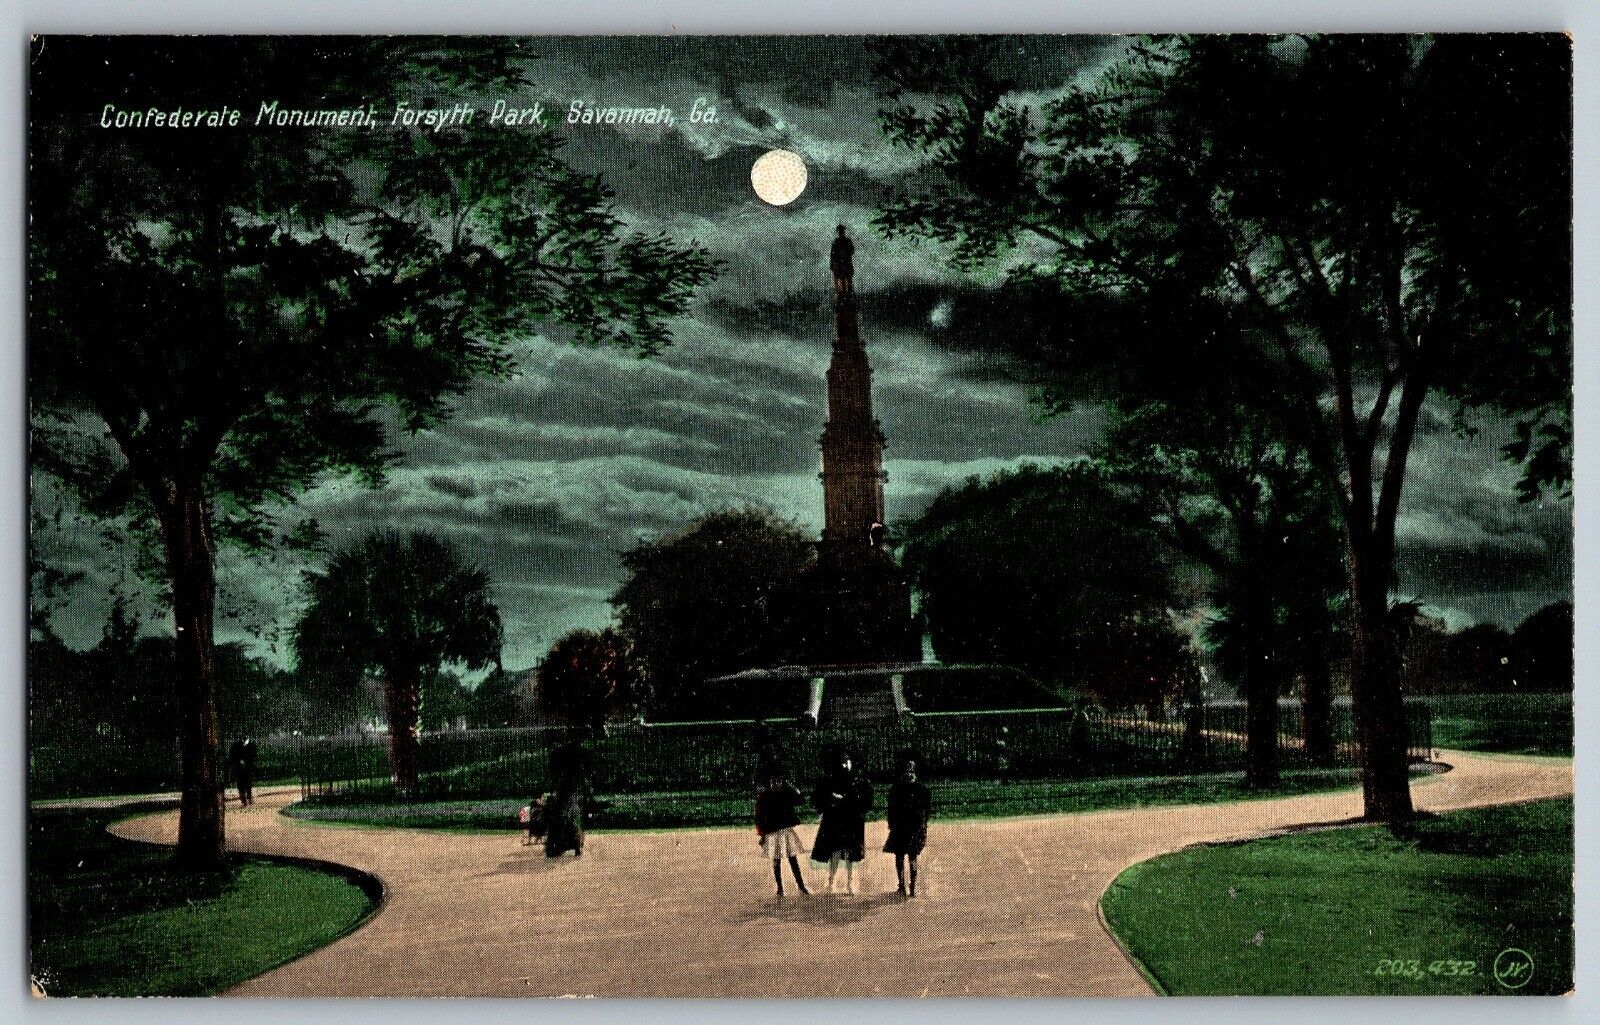 Savannah, Georgia - Confederate Monument - Forsyth Park - Vintage Postcard